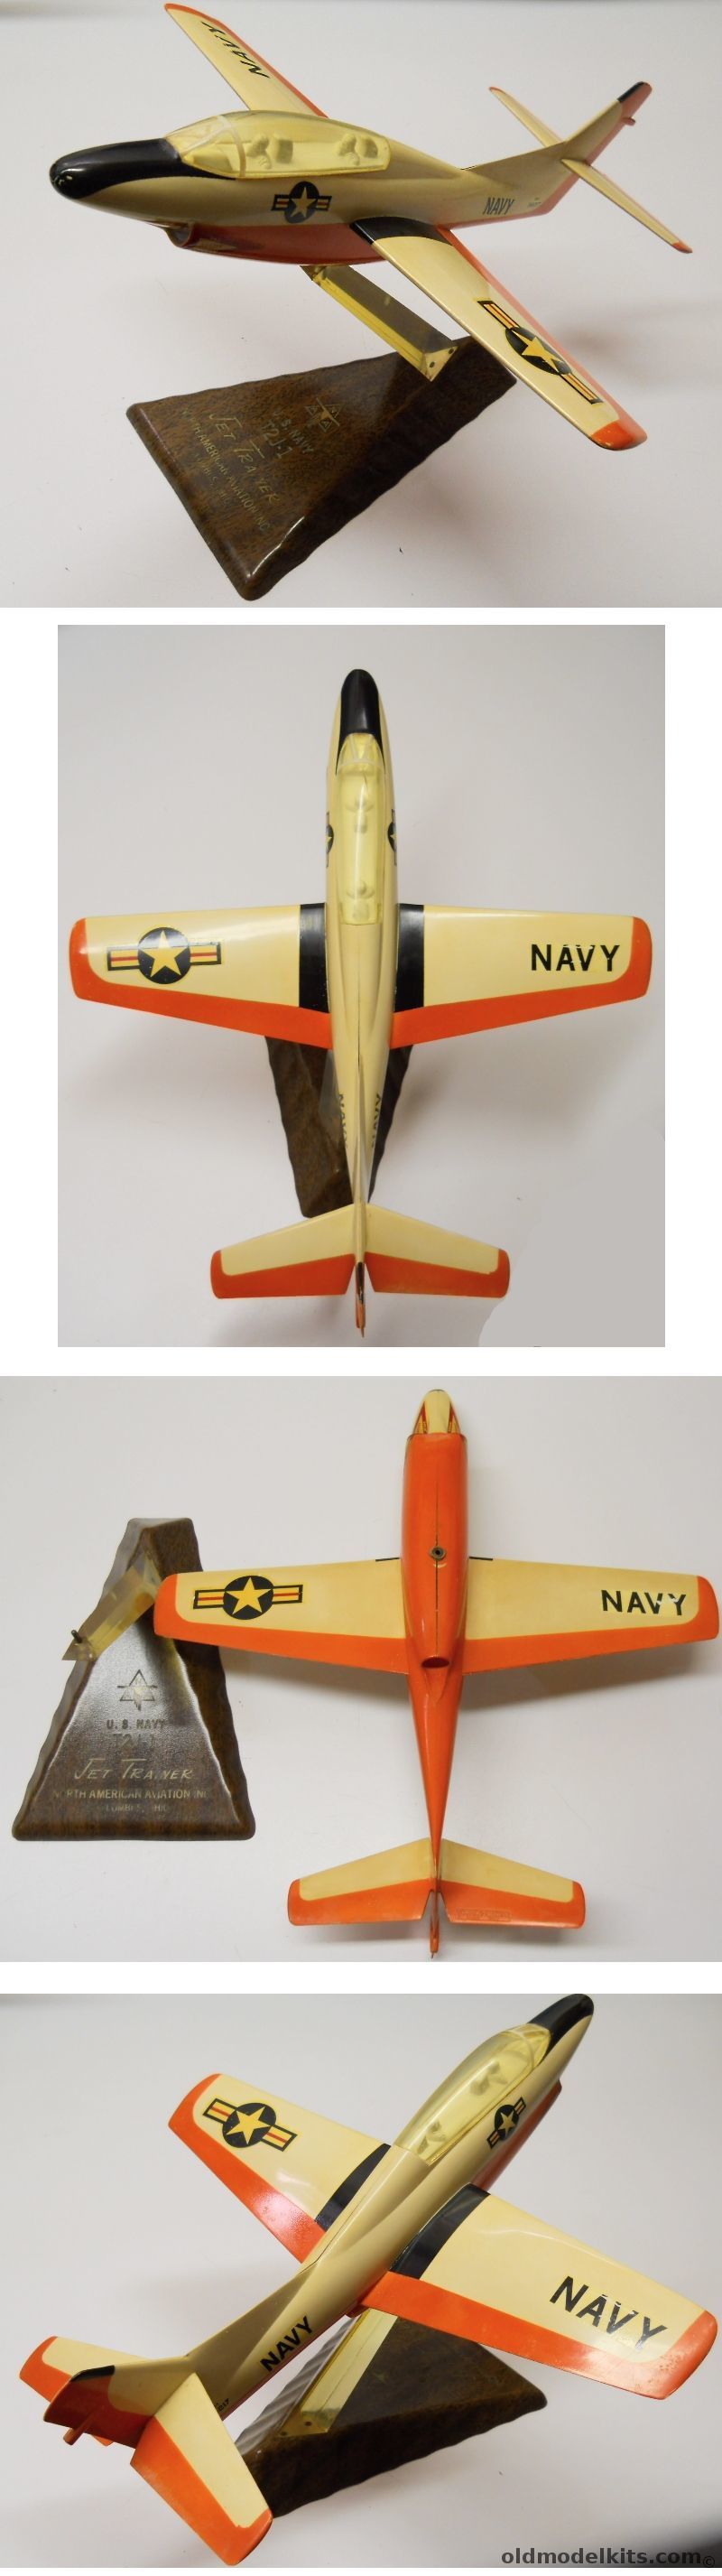 Topping North American Aviation T2J-1 Jet Trainer Buckeye - Factory Desktop Model plastic model kit